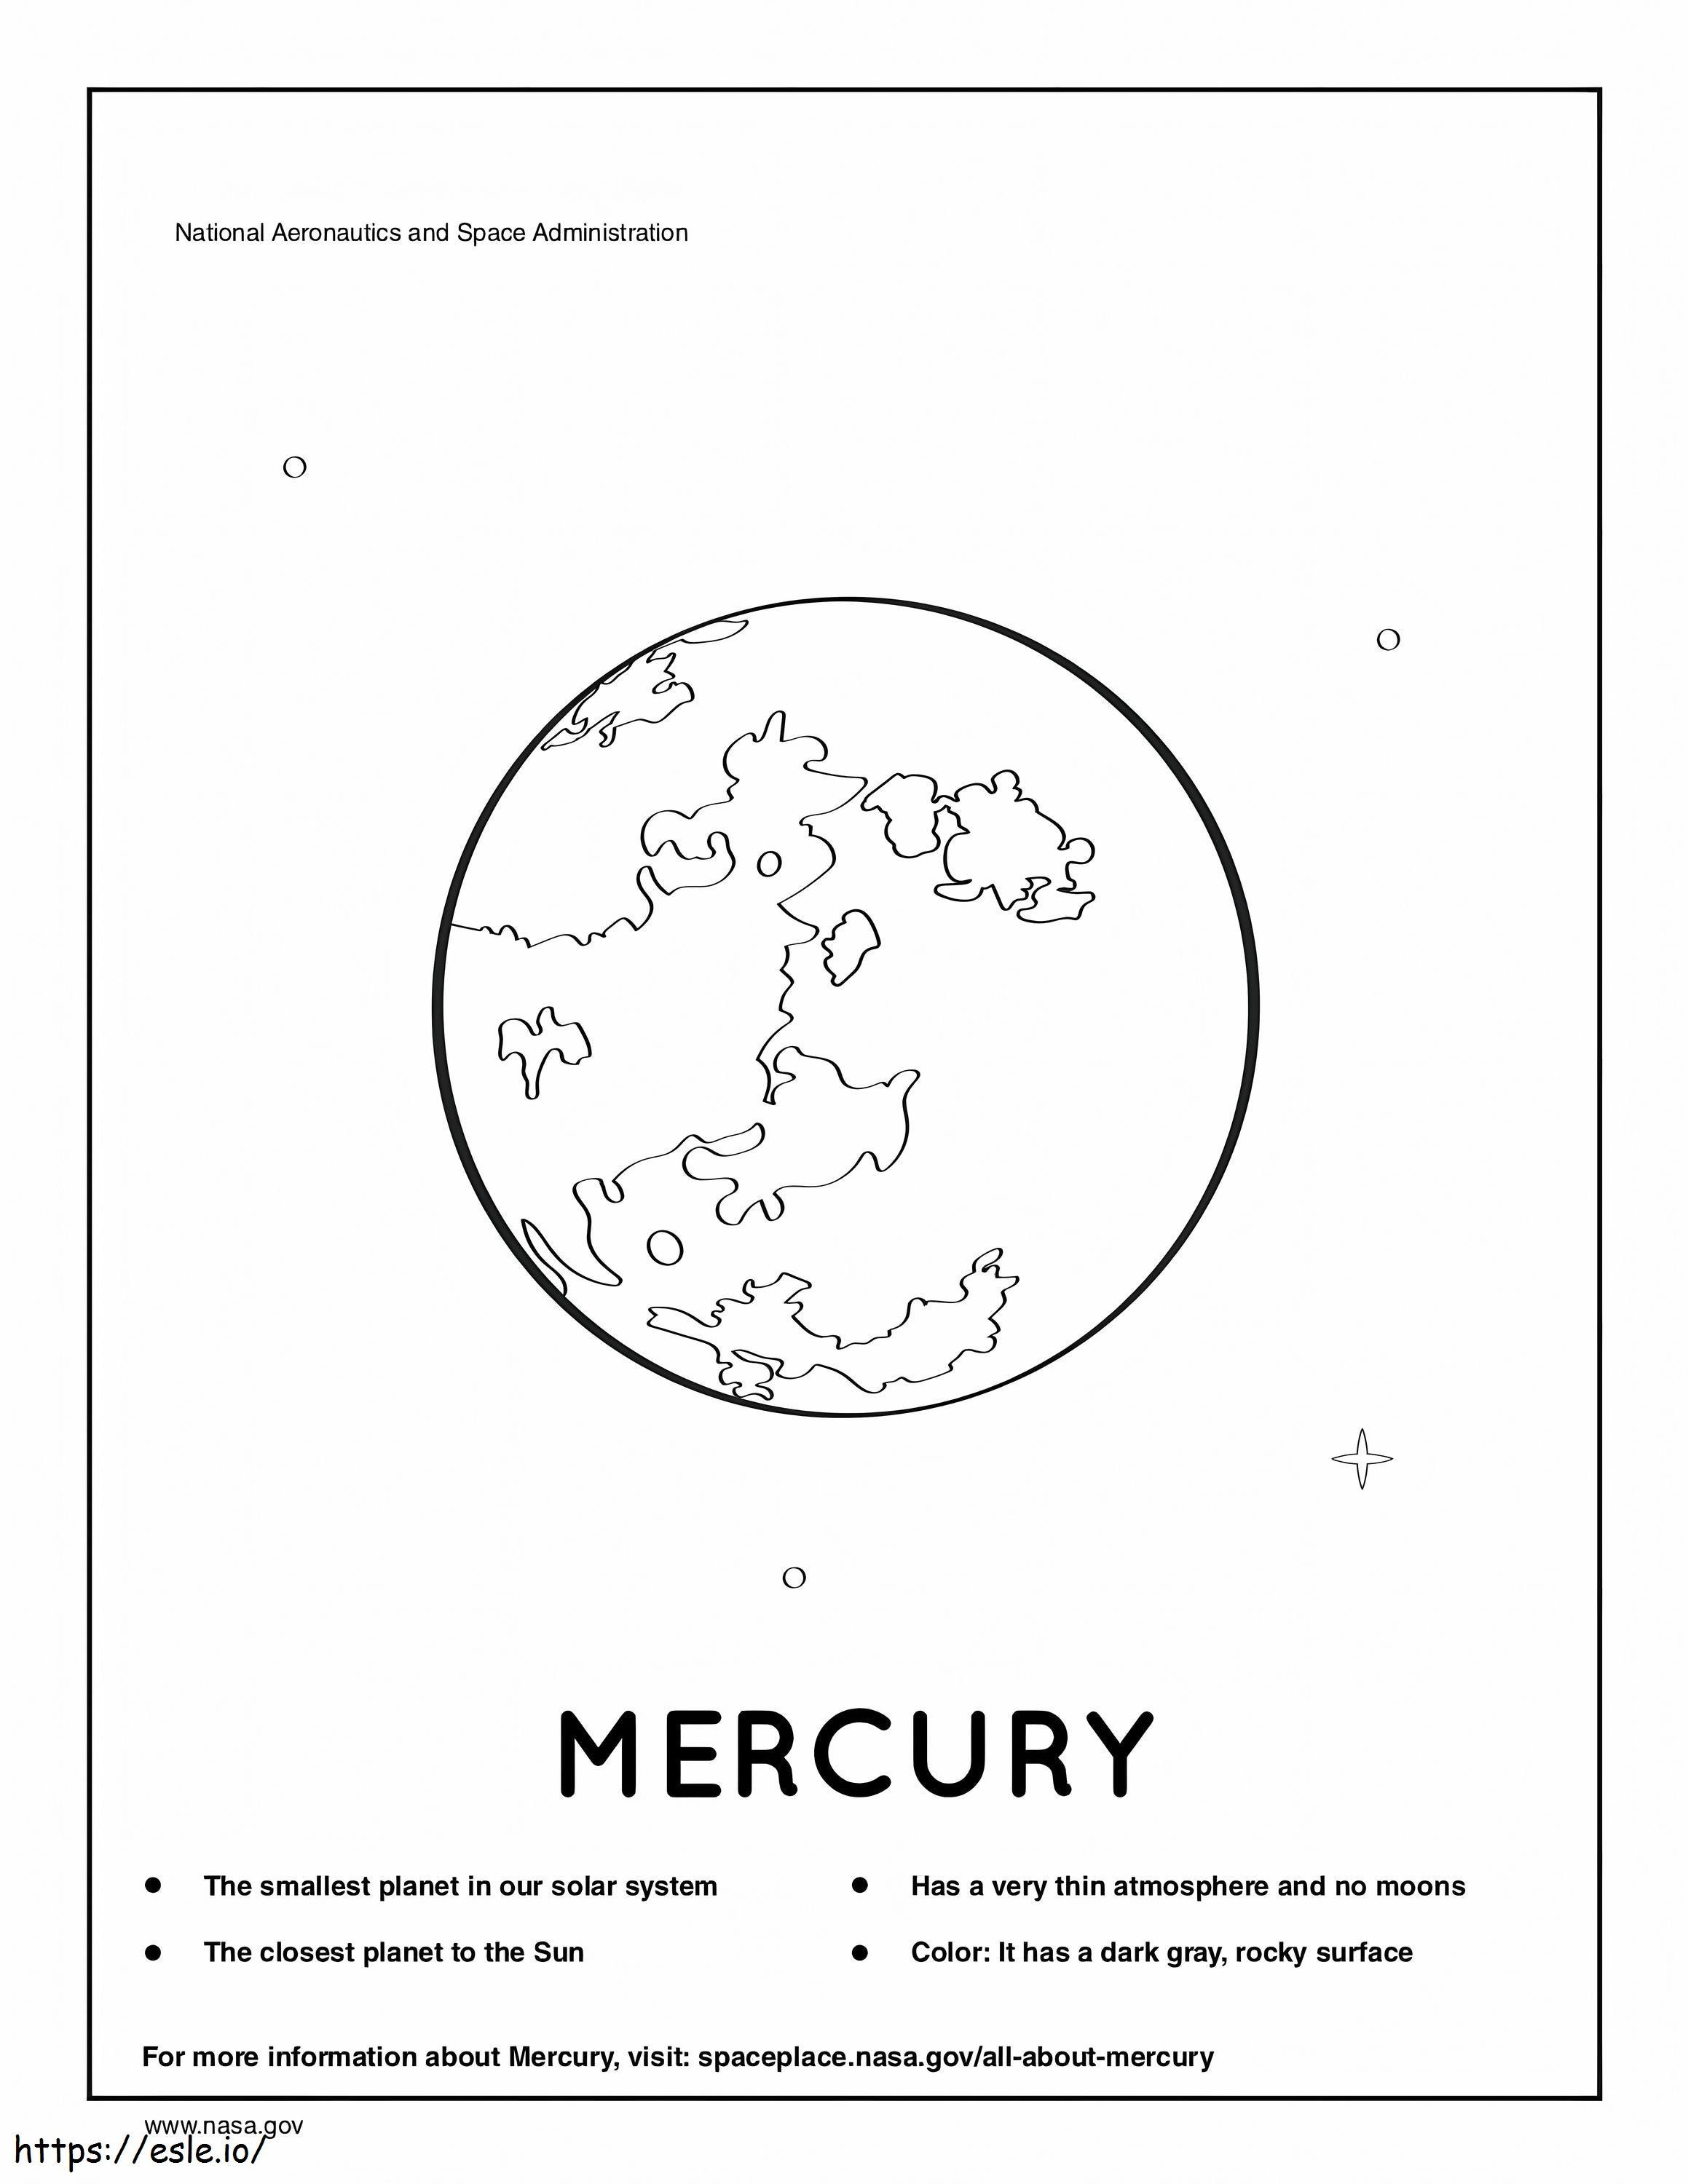 Mercury coloring page